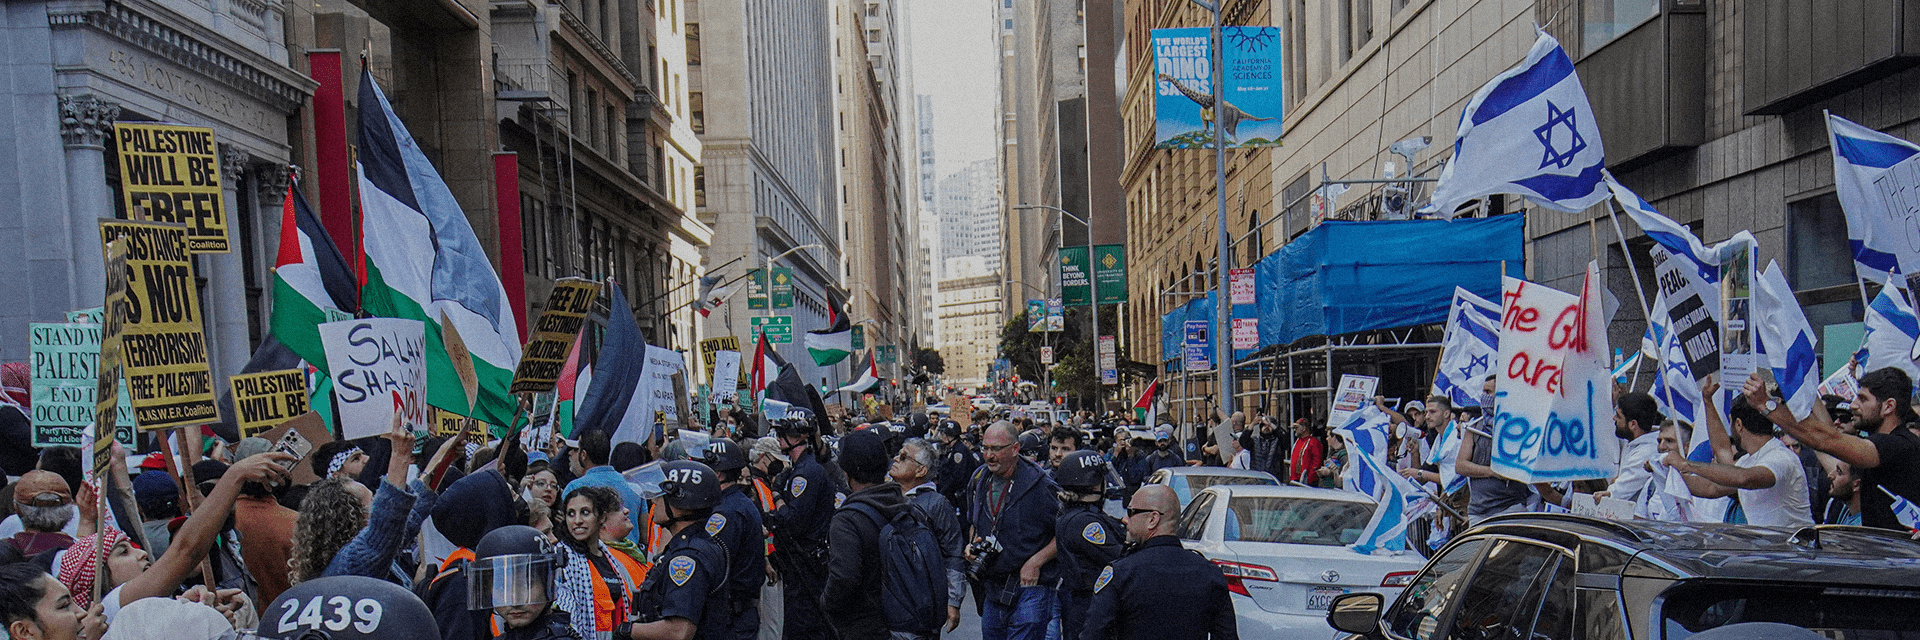 Protestors in NYC